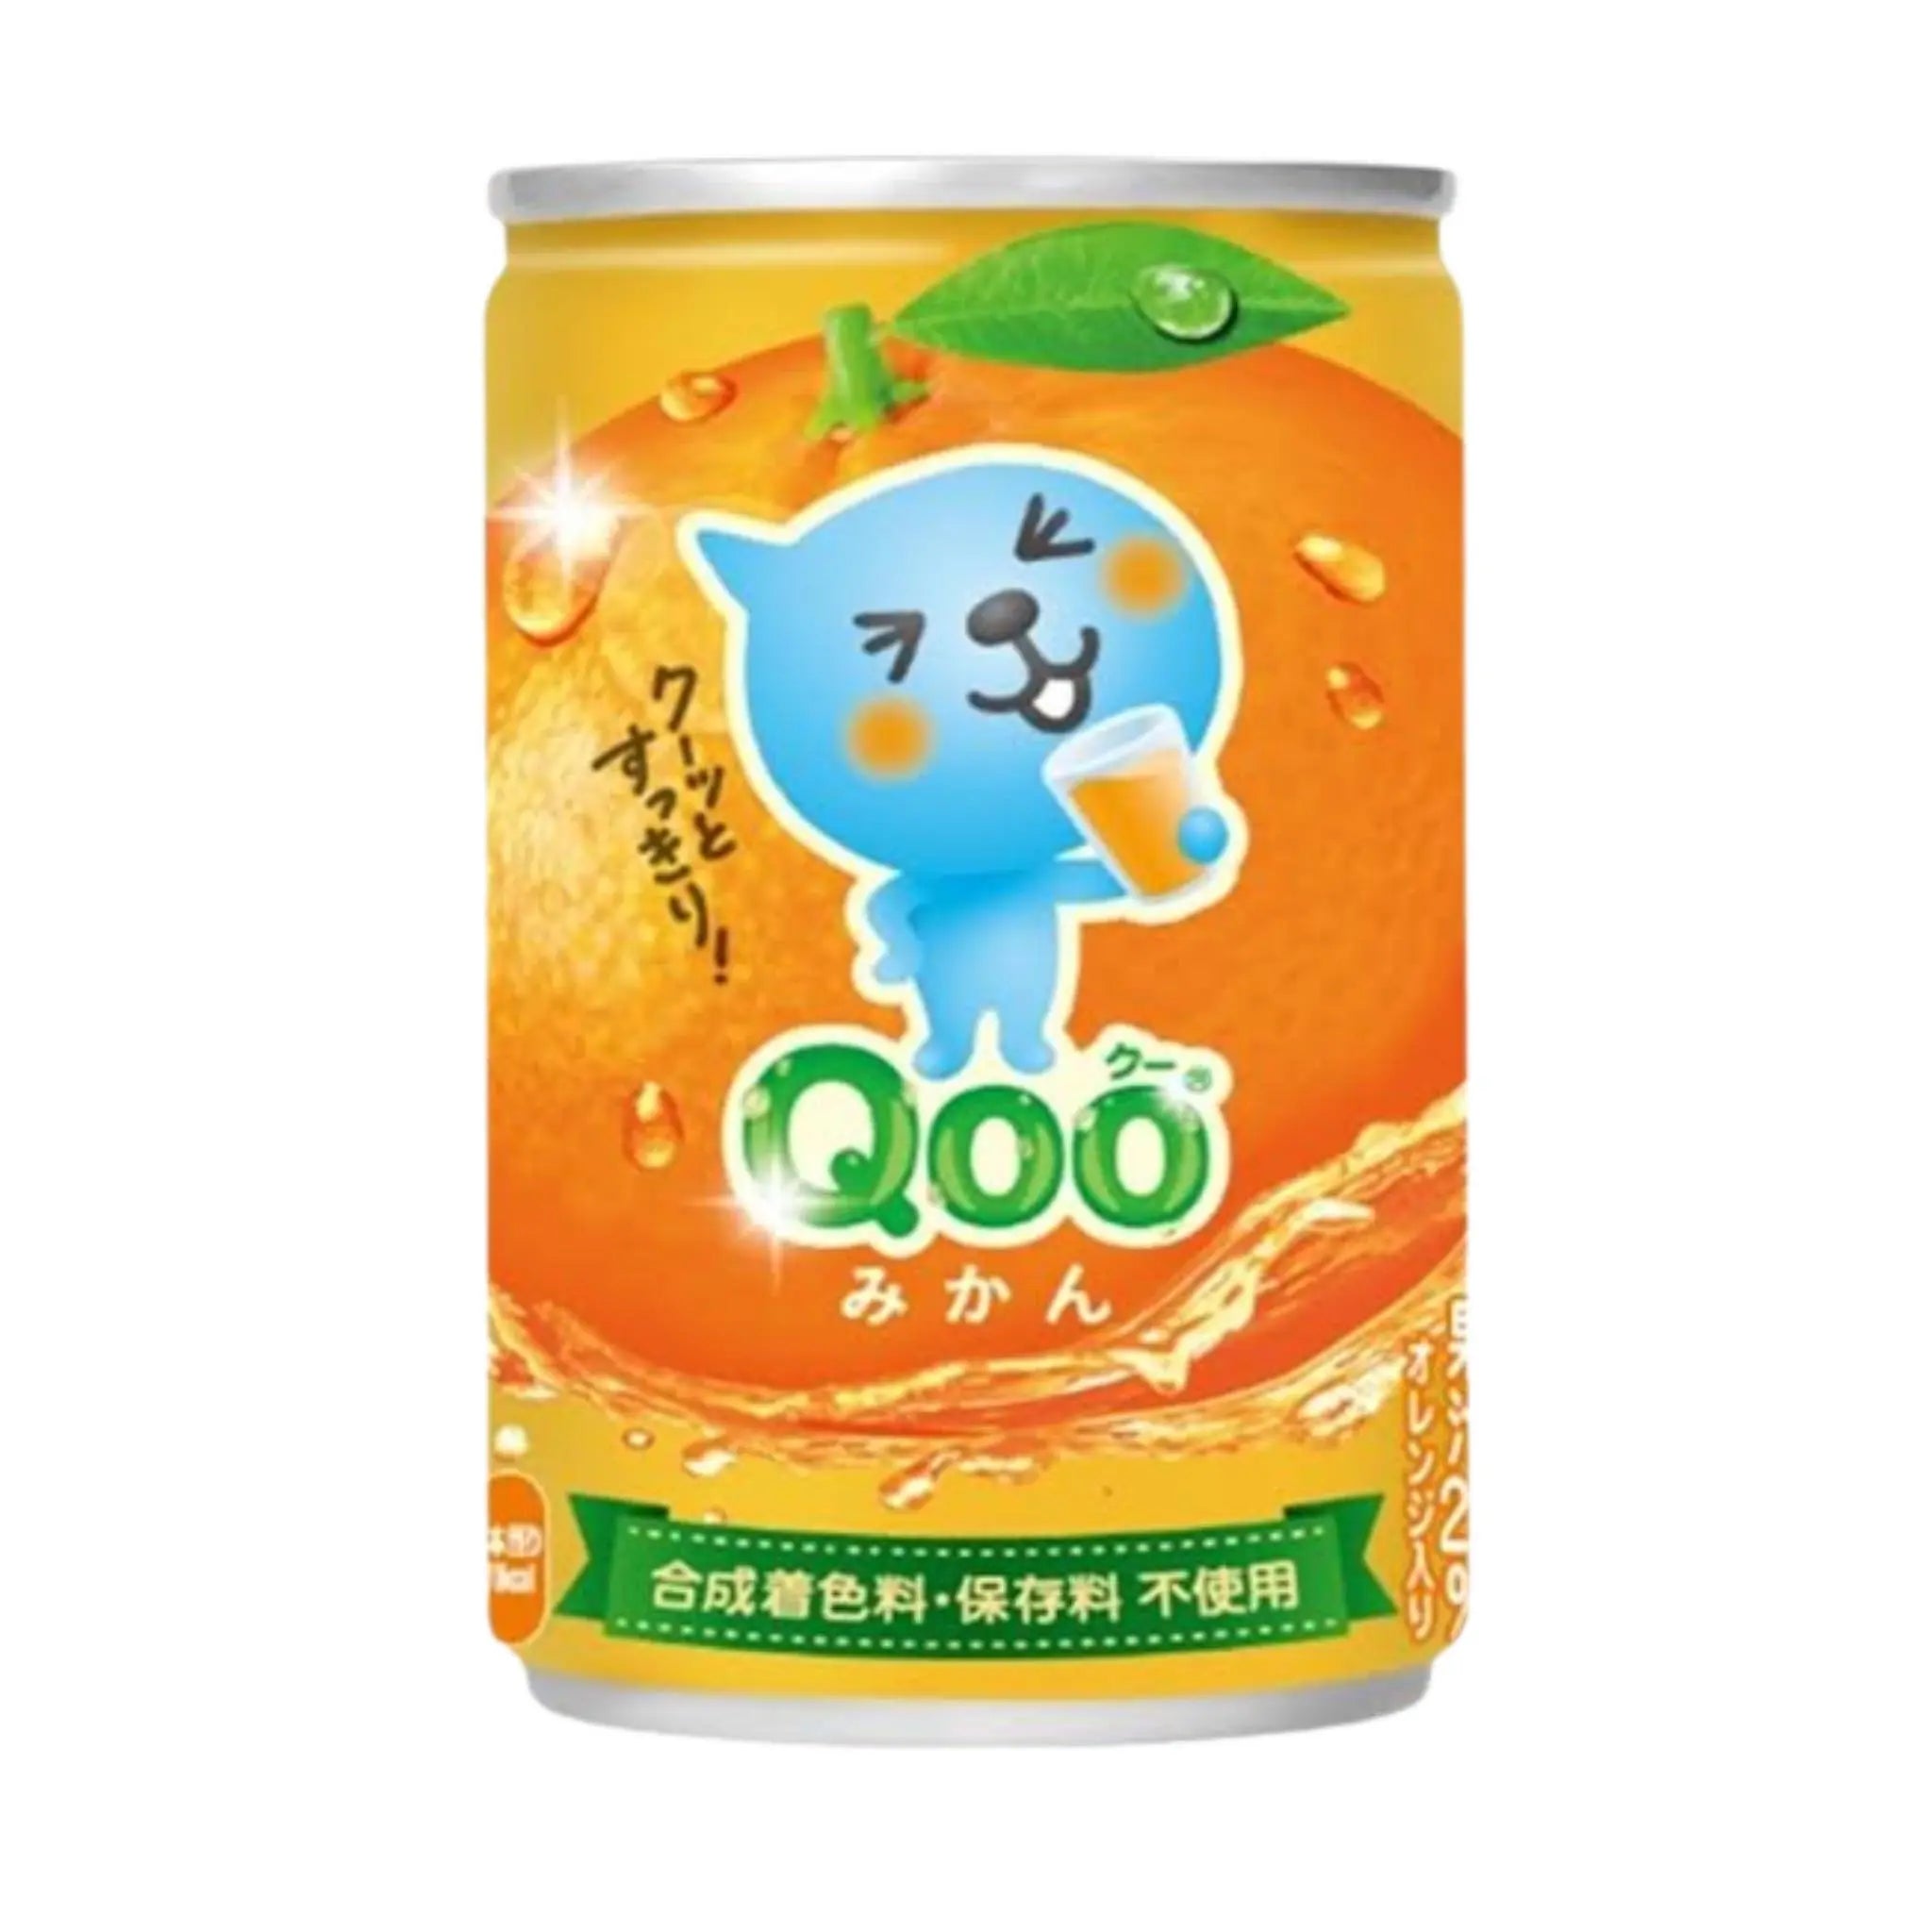 Minute Maid Qoo Orange Juice JAPANESE 160g Can - Pack of 30 (1 × 30) Marino.AE